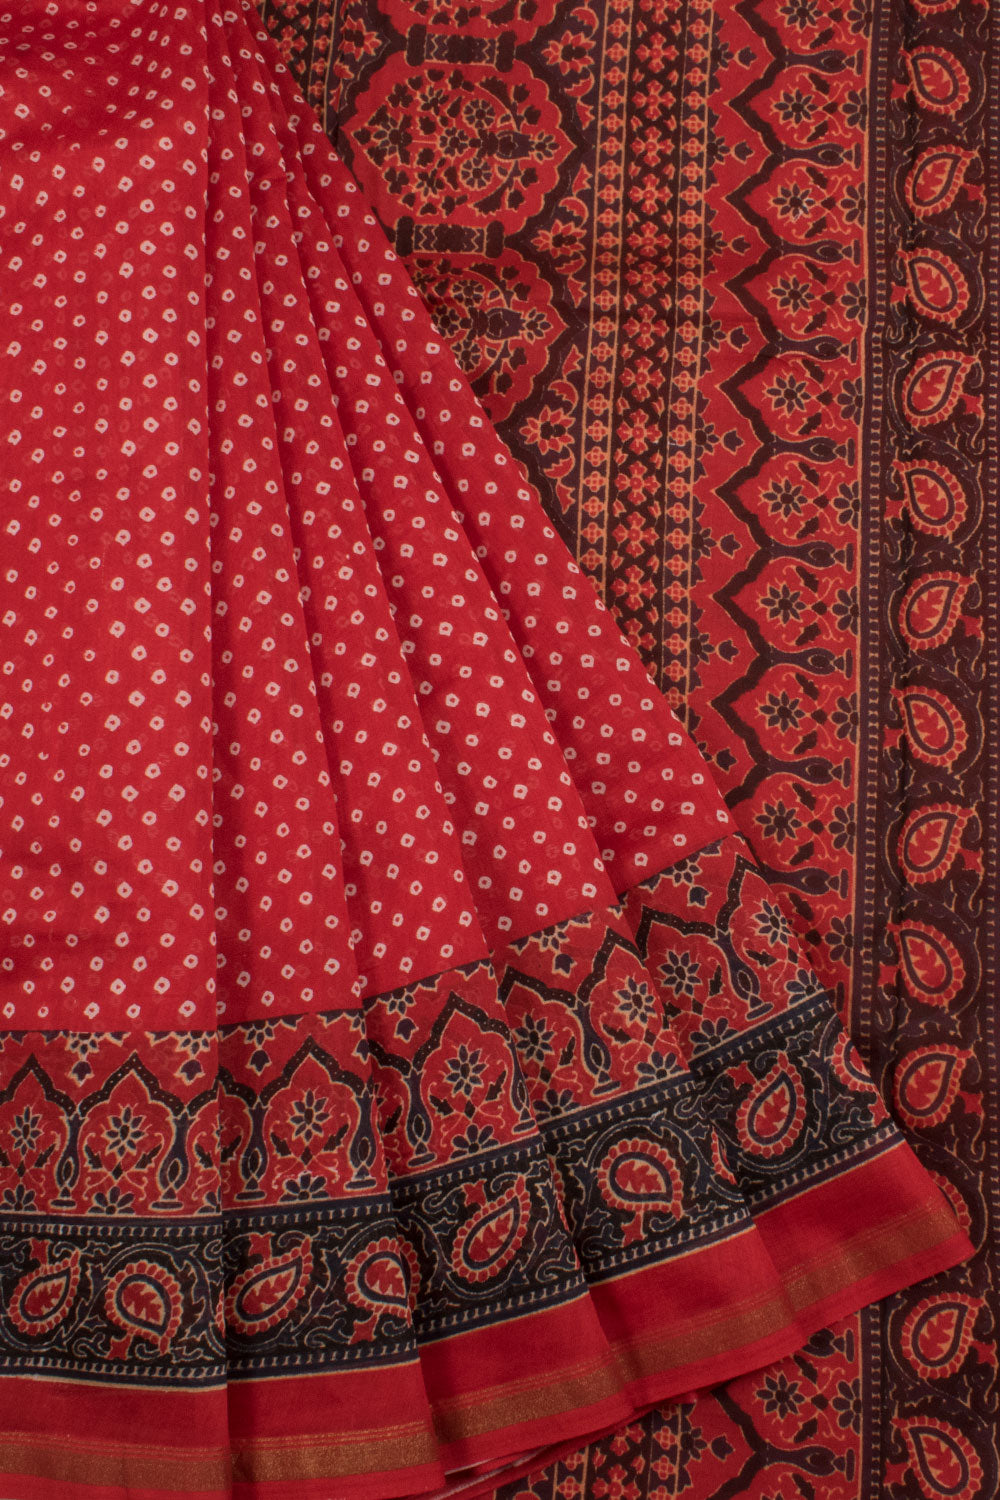 Hand Block Printed Chanderi Silk Cotton Saree with Floral Motifs Border